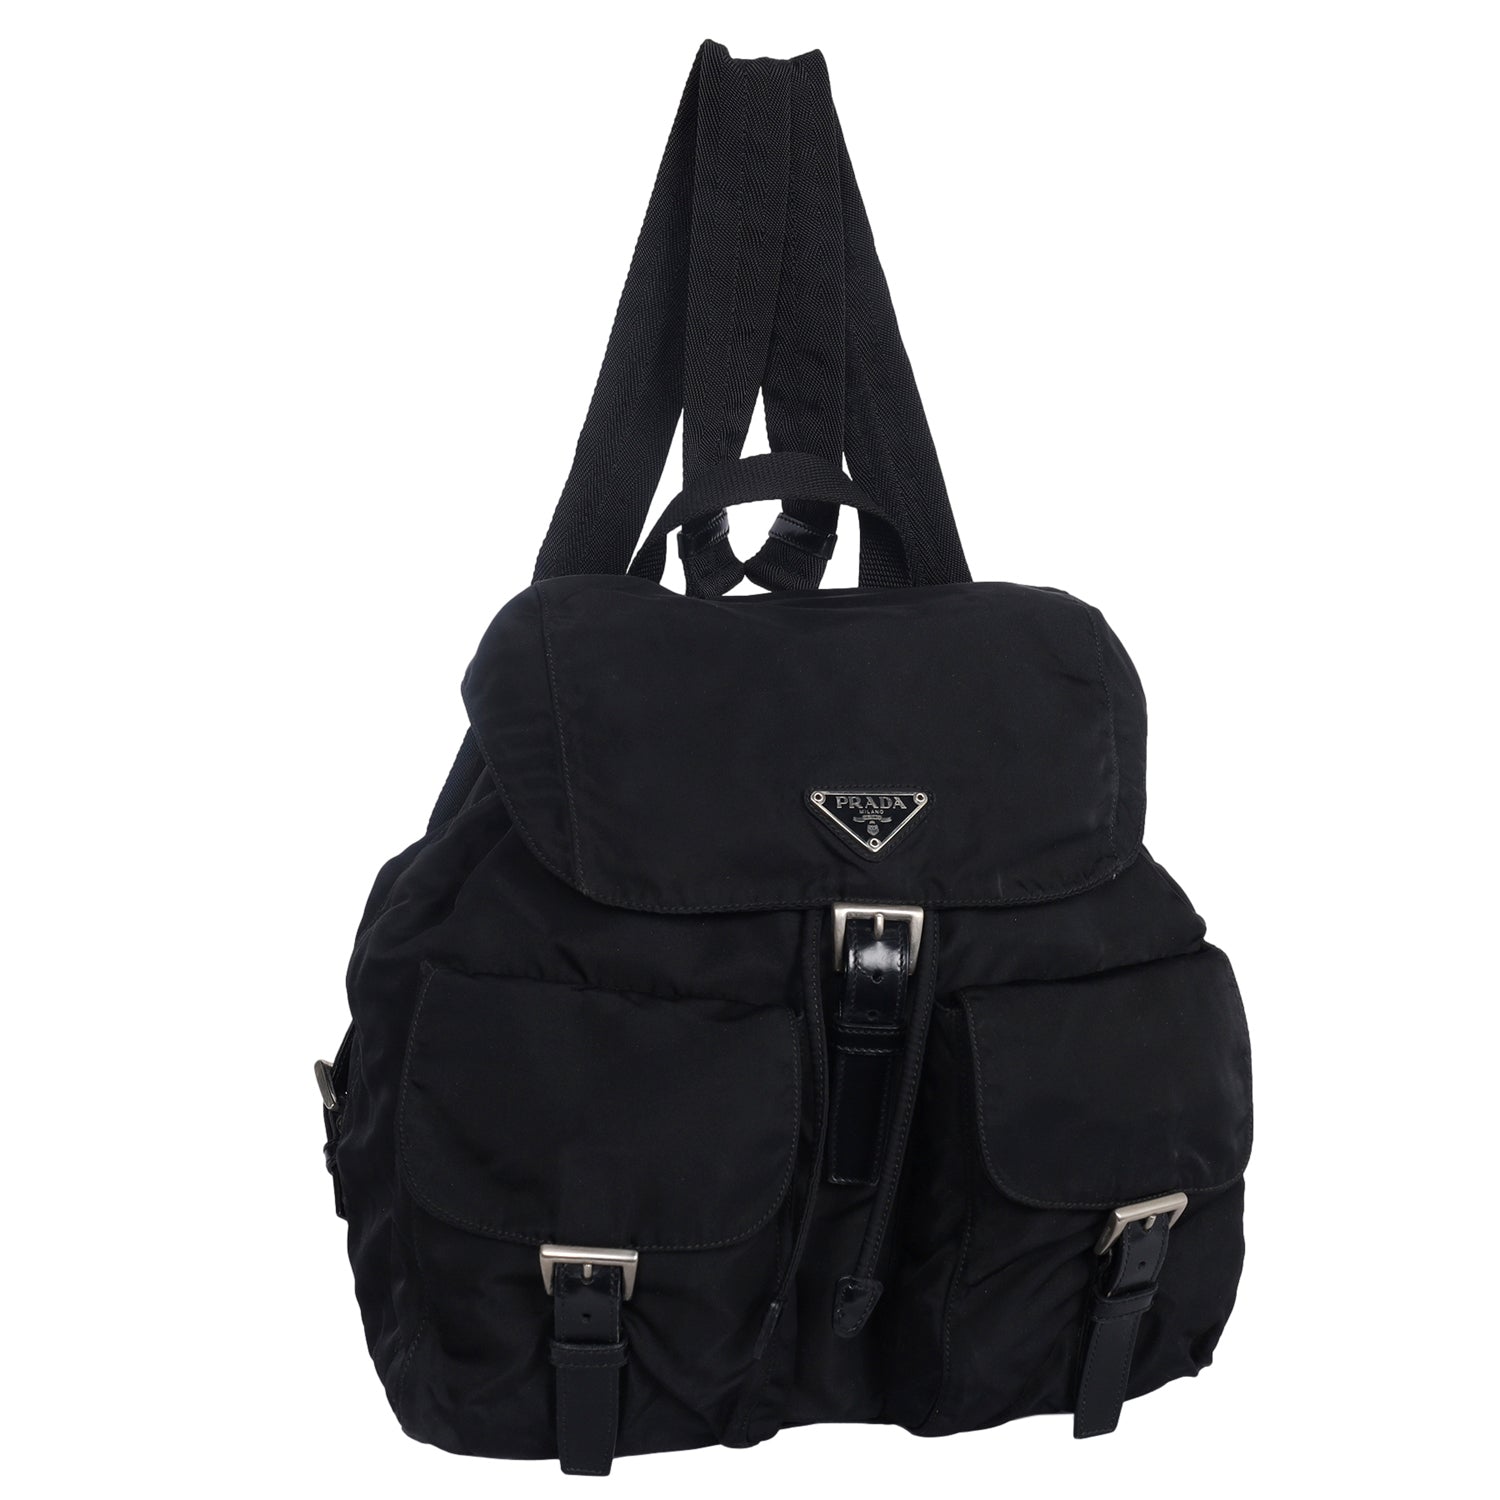 PRADA Vintage Nylon Backpack Black